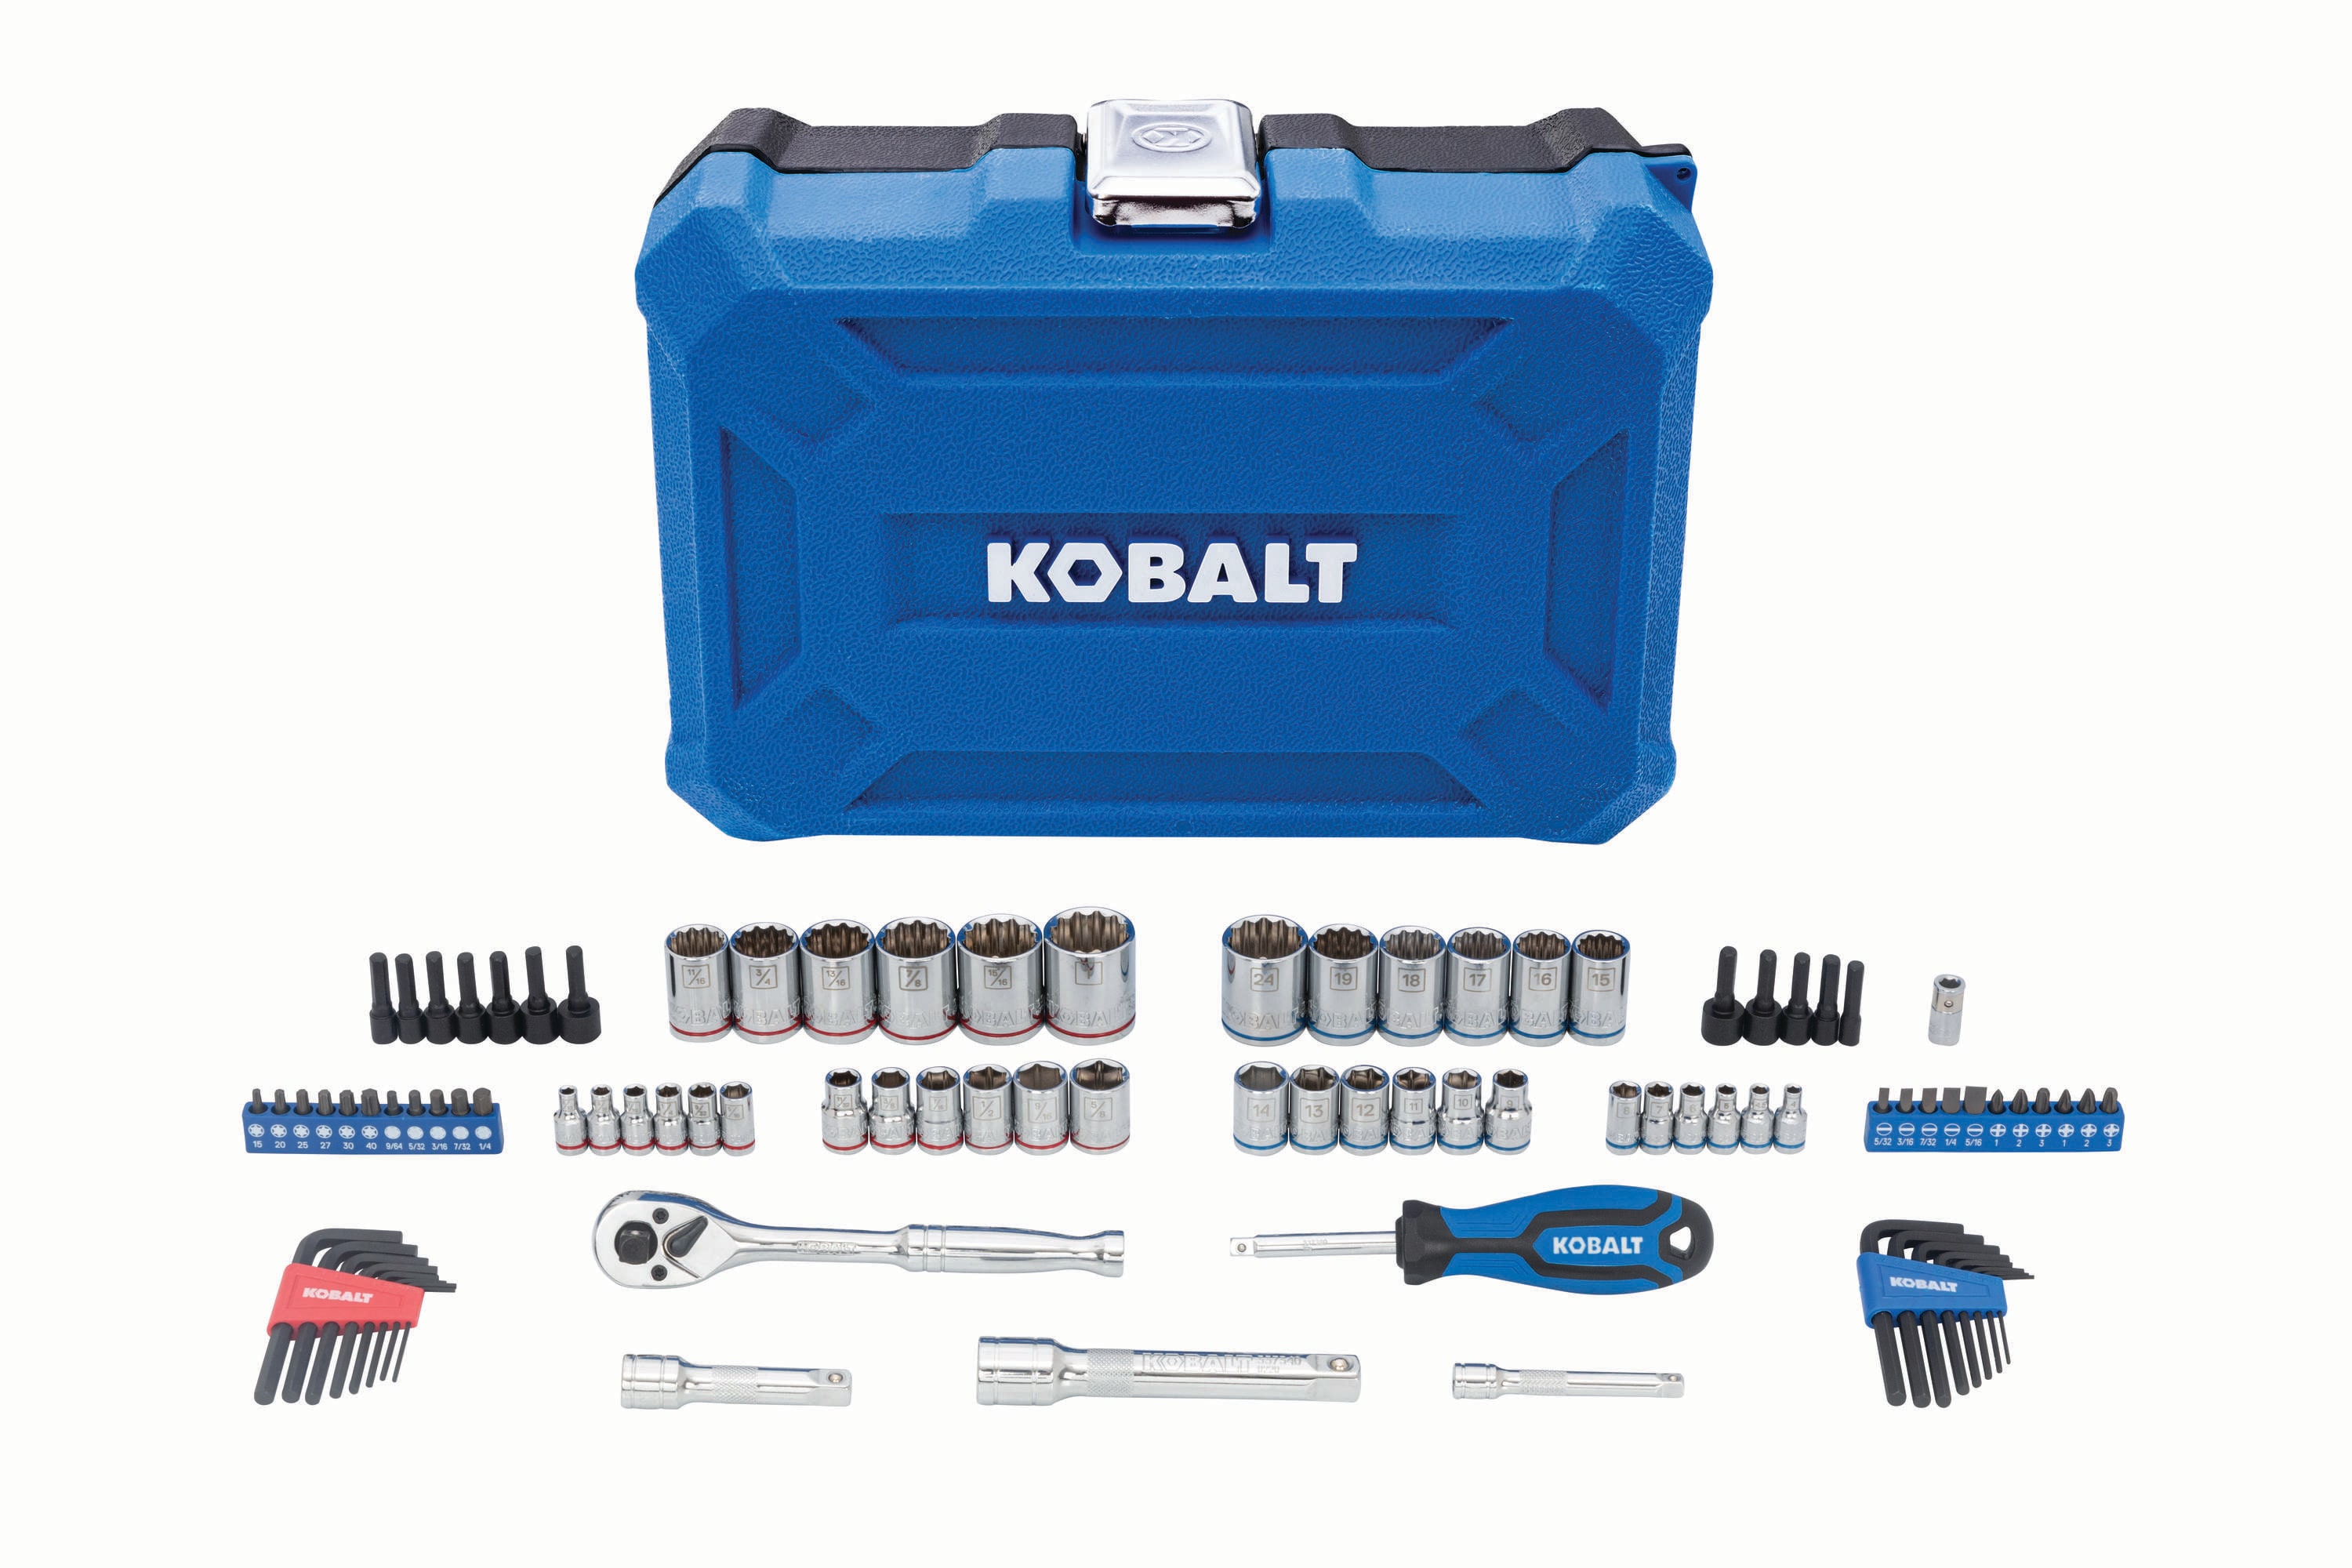 92-Piece Kobalt Standard (SAE) & Metric Mechanics Tool Set $30 & More at Lowe's + Free Store Pickup